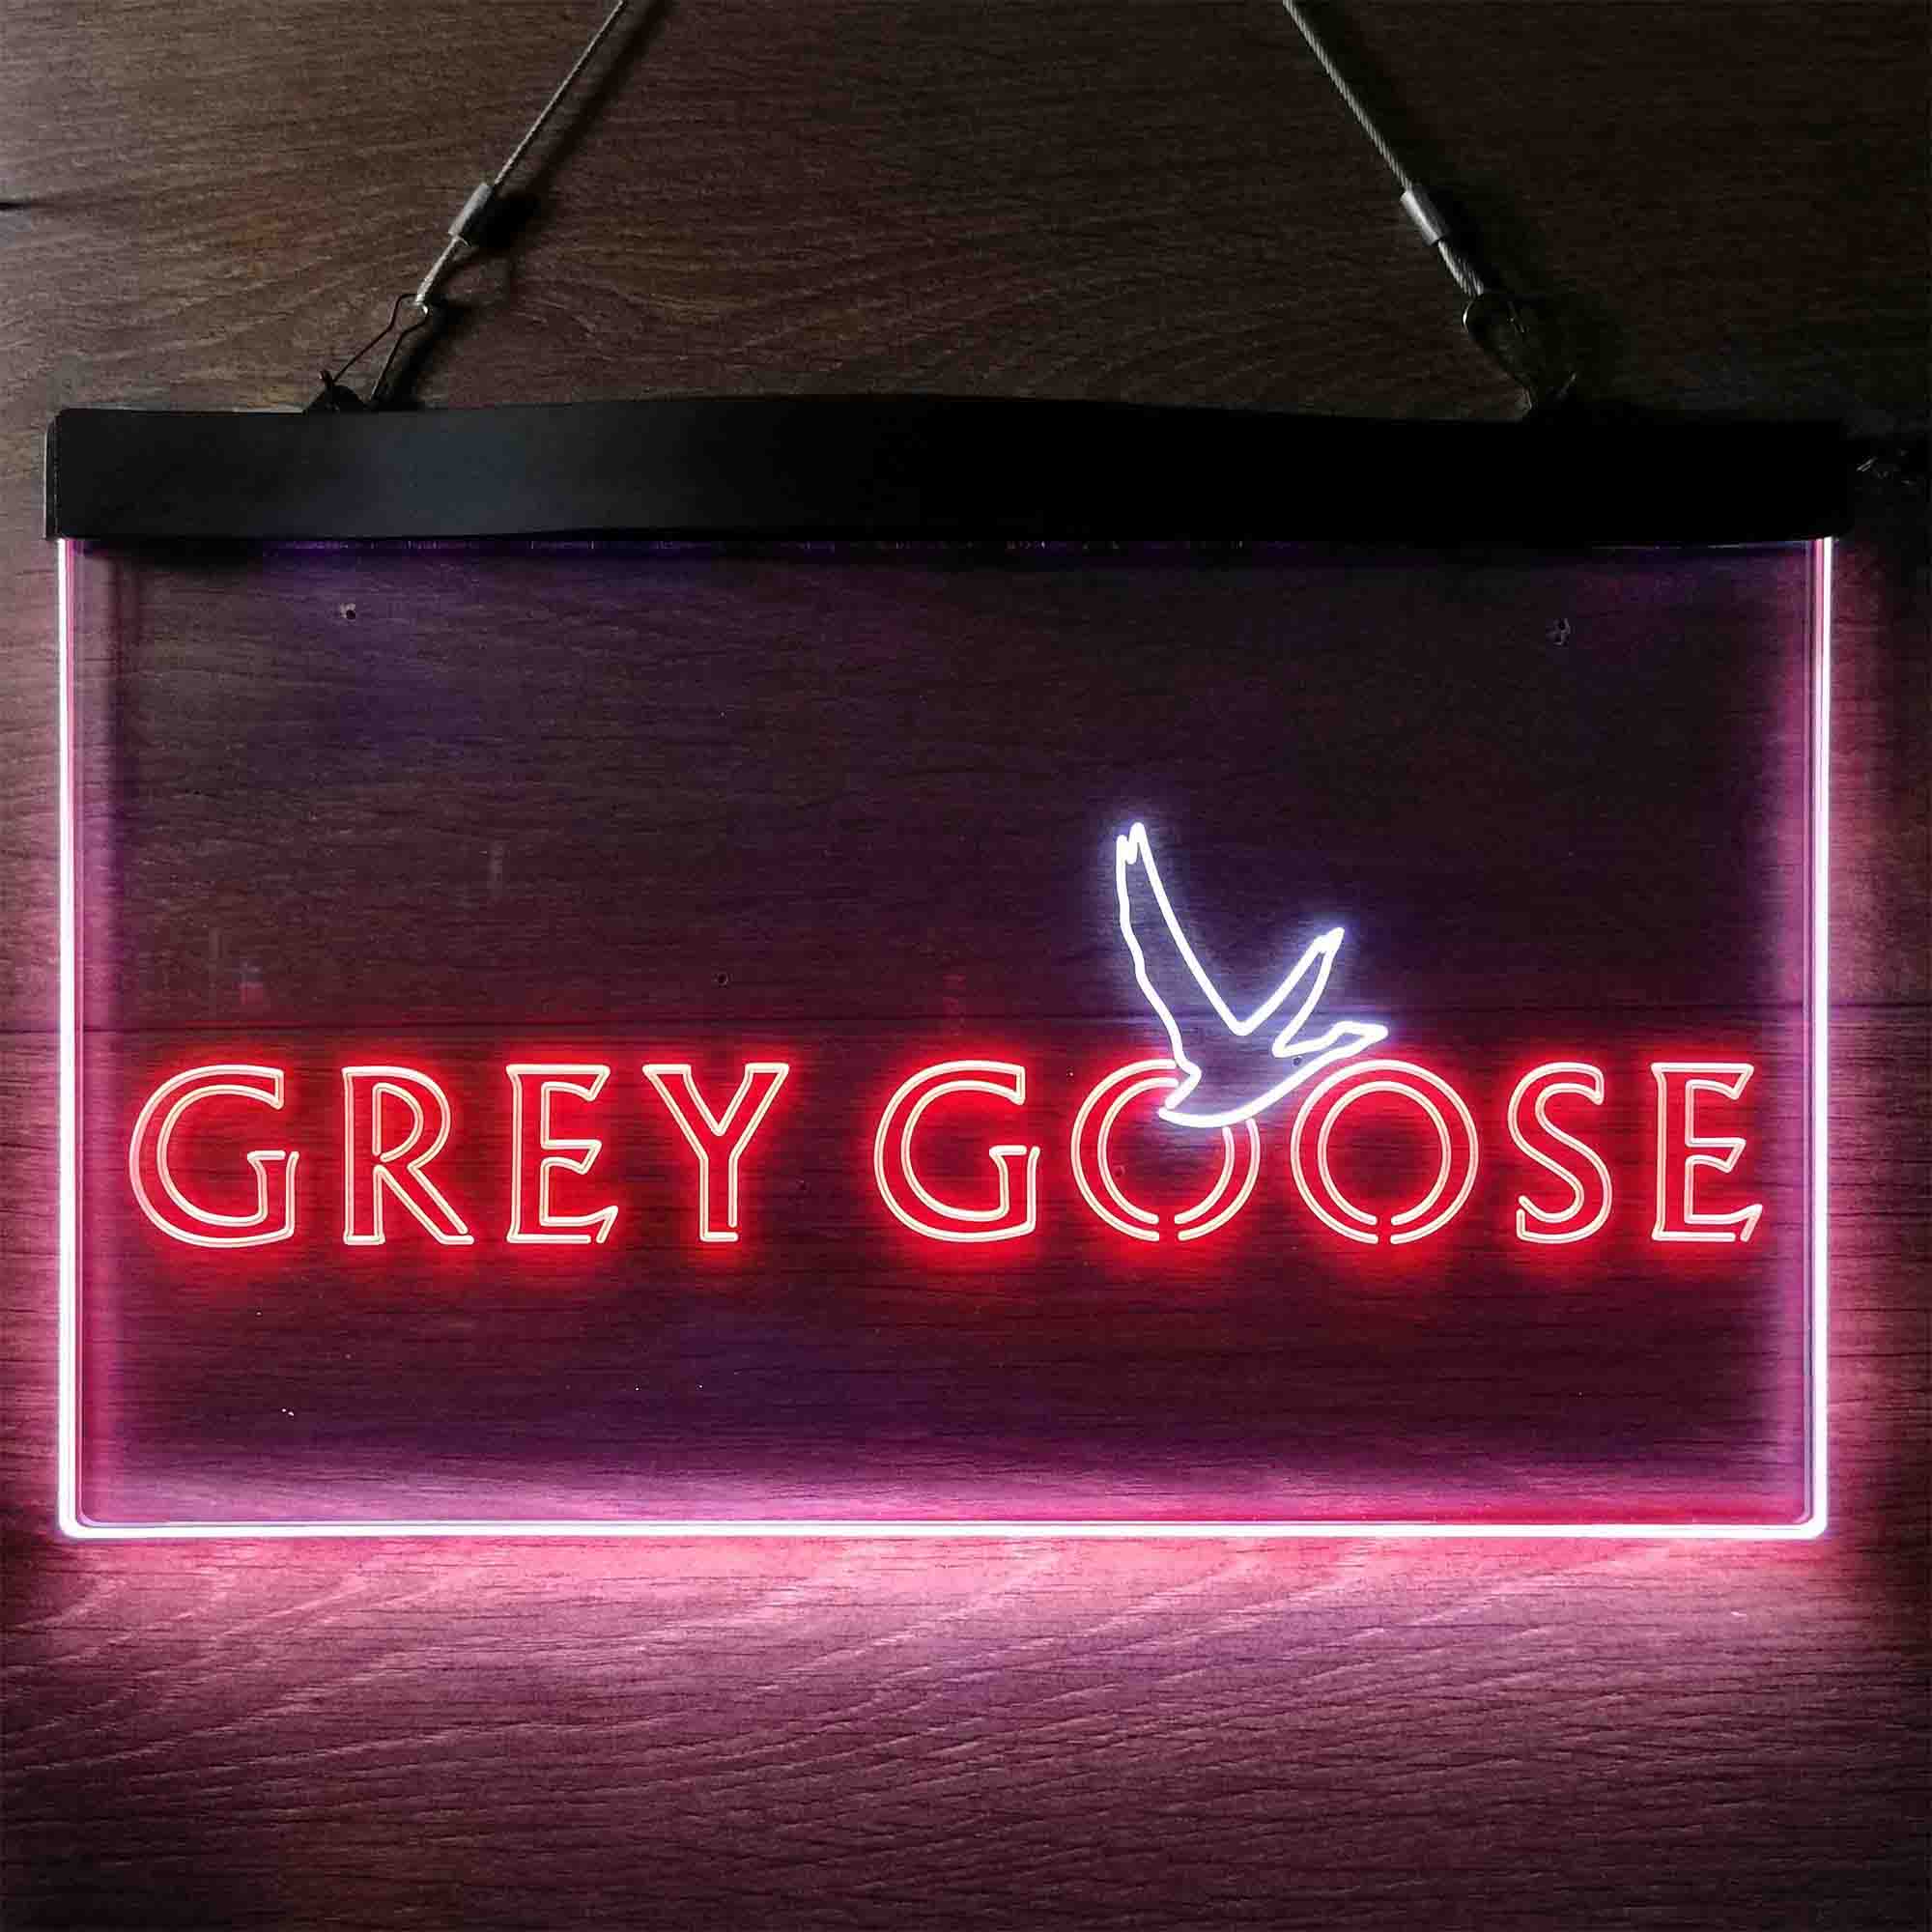 Grey goose LED neon light Sign Bar Club Pub Advertise Home Decore size 12 x 8 